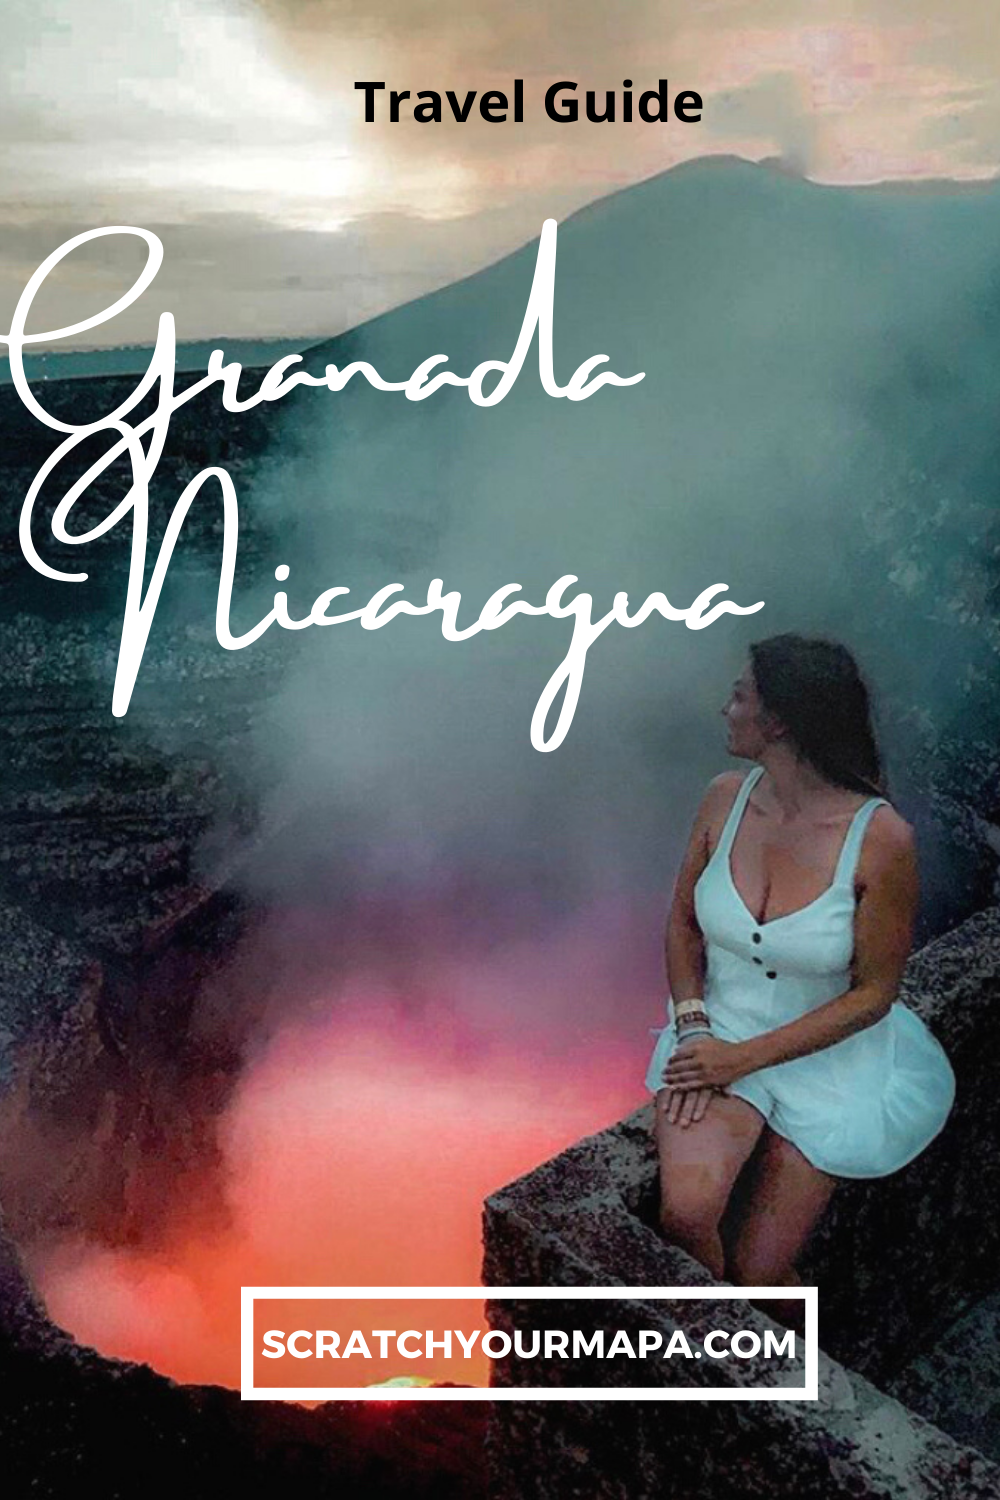 Things to Do in Granada Nicaragua Pin